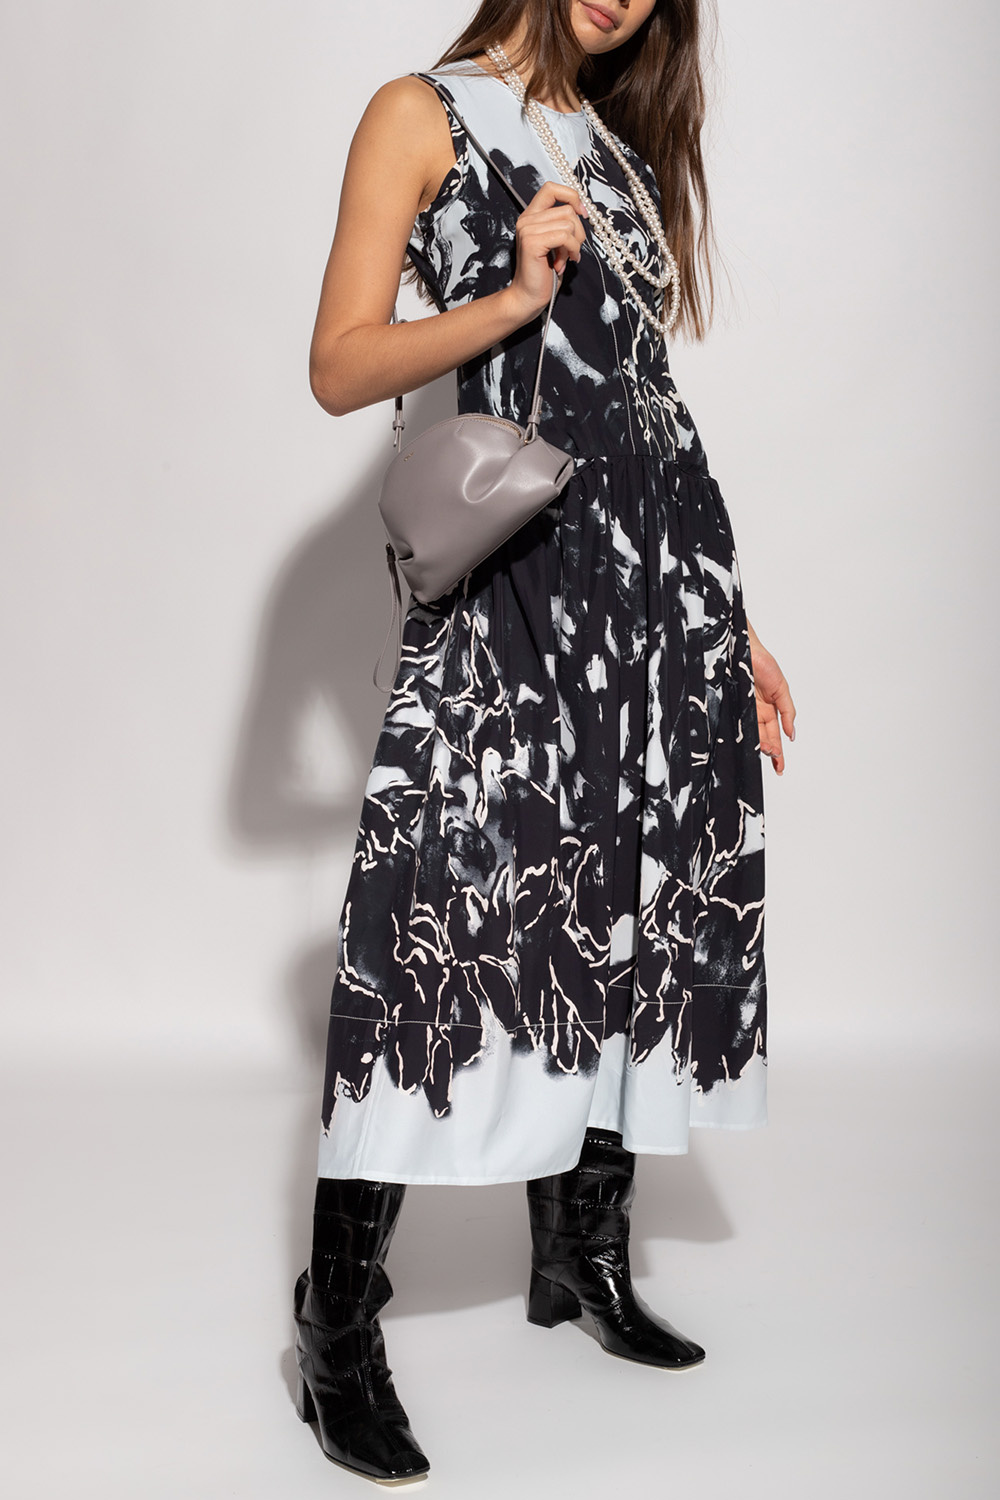 Proenza Schouler Patterned dress